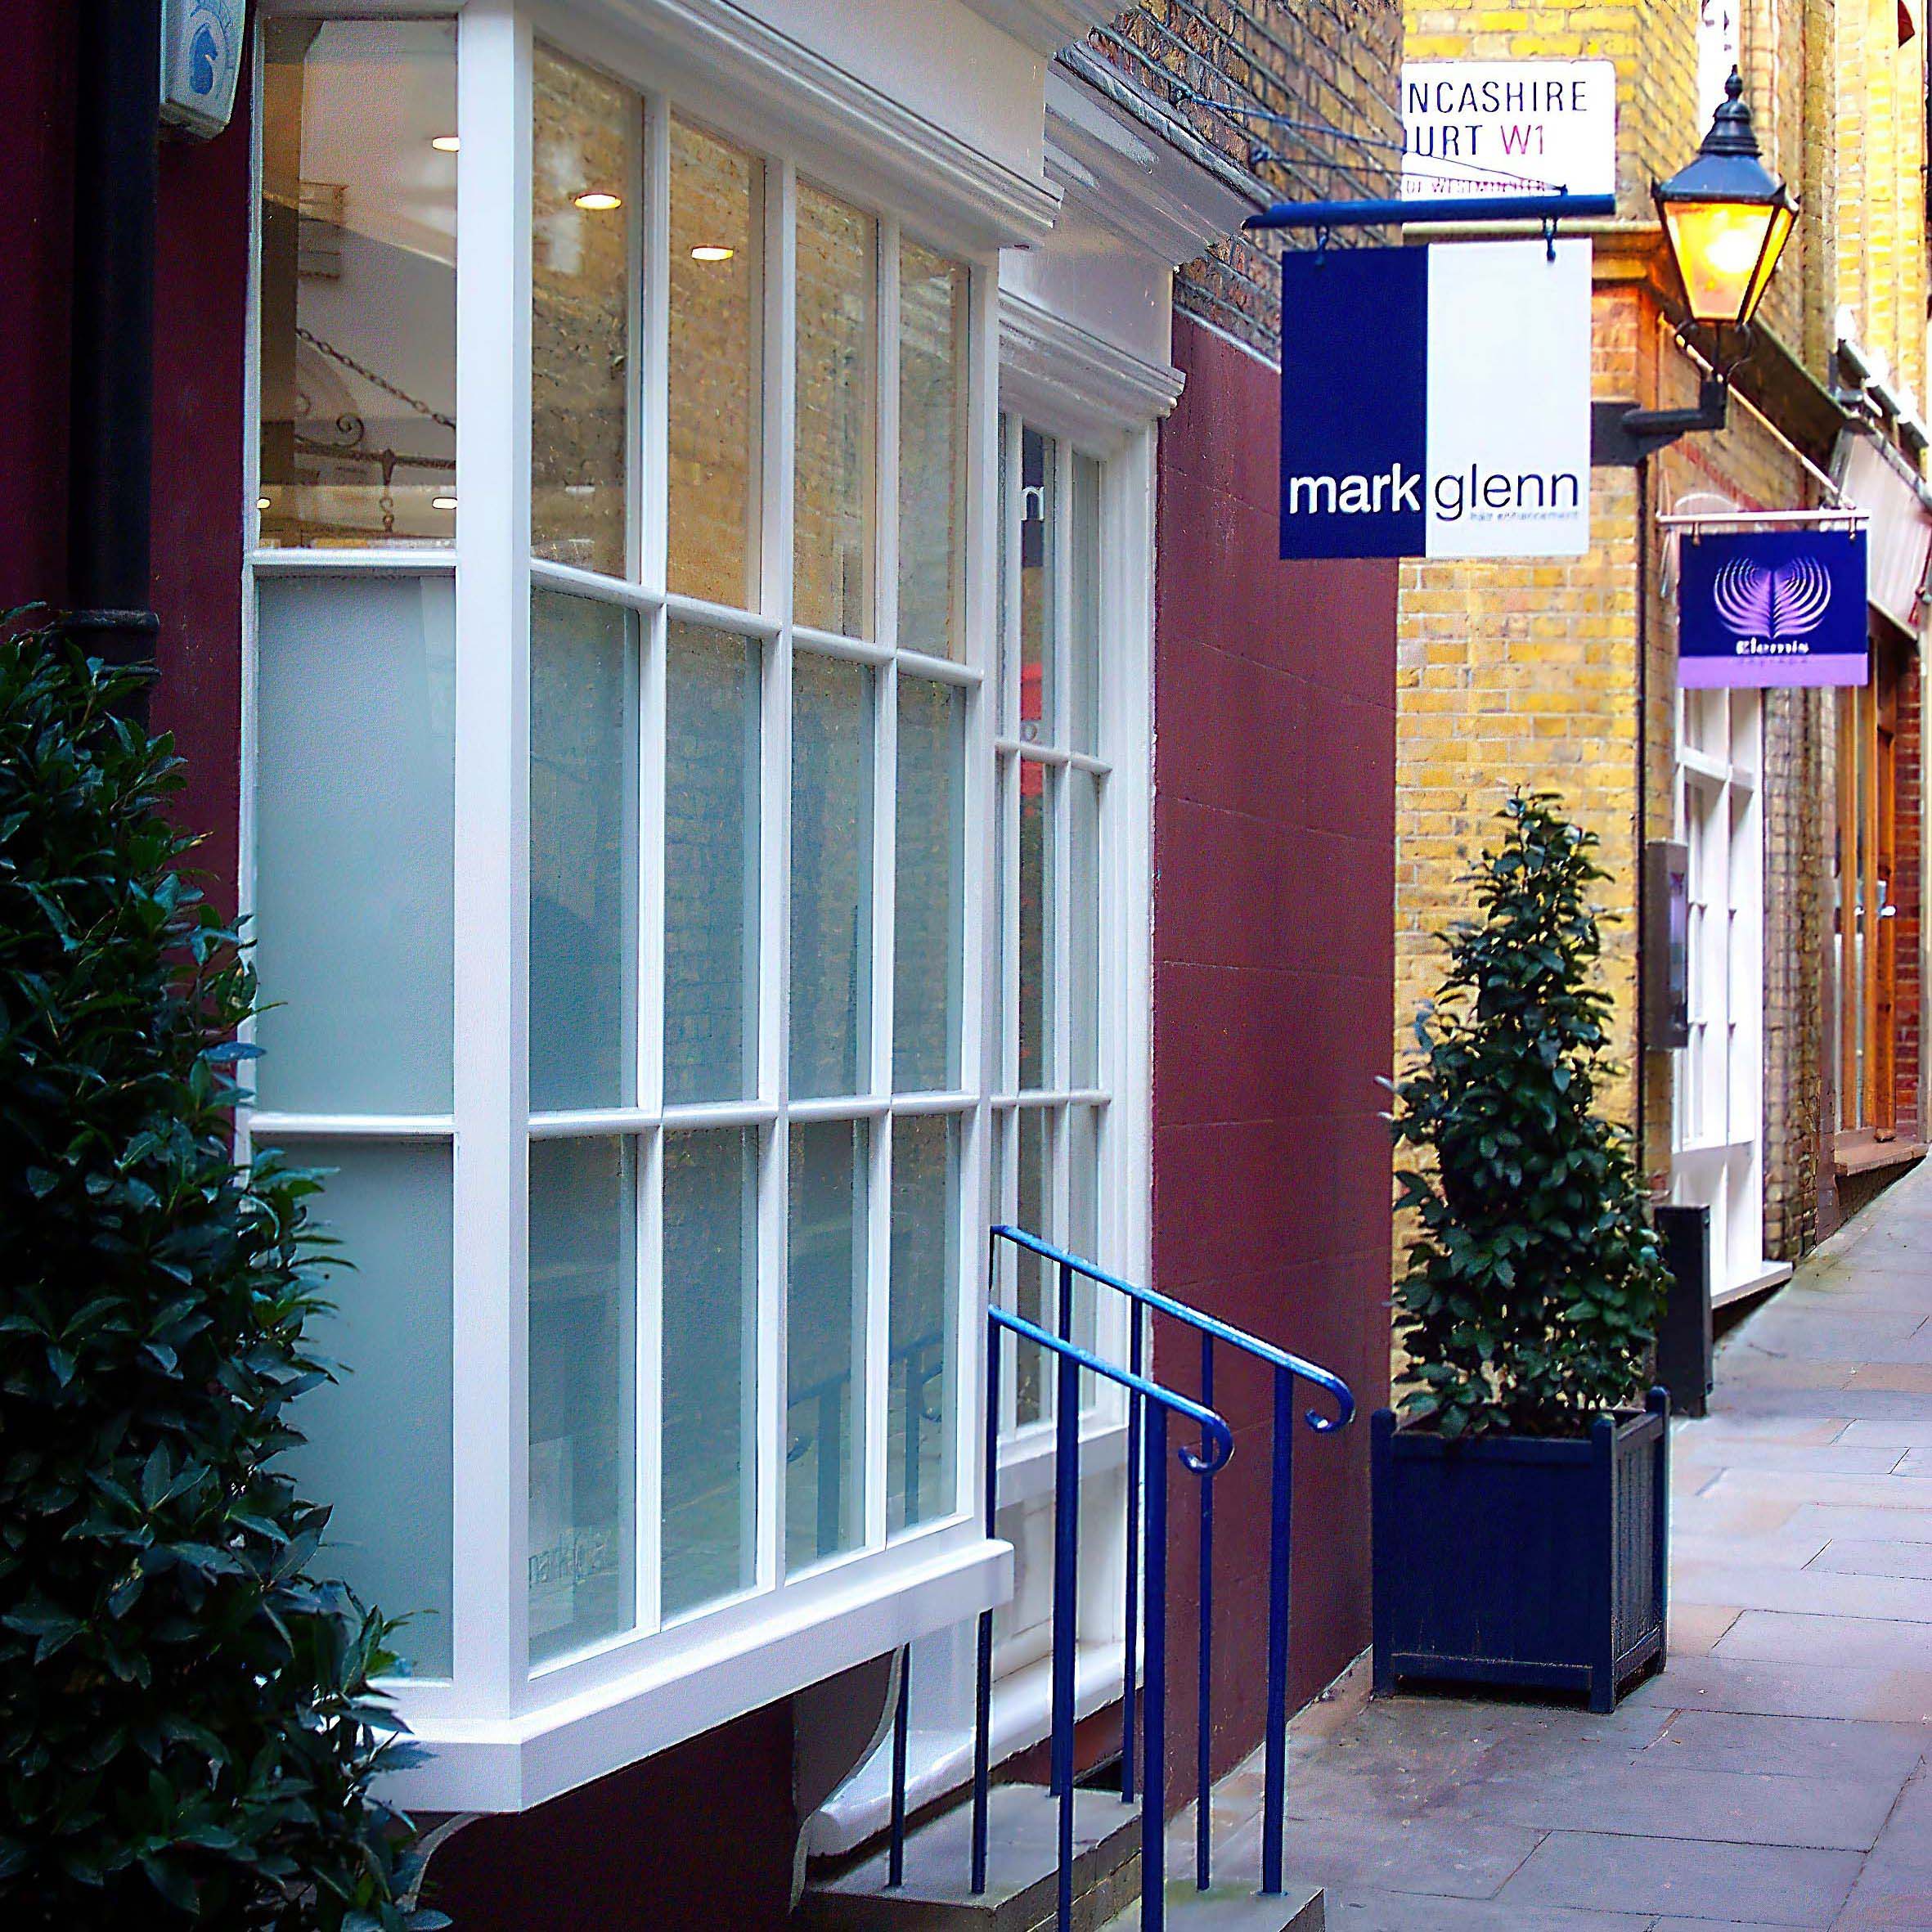 Mark Glenn's first location in Lancashire Court, New Bond Street, London - 2001